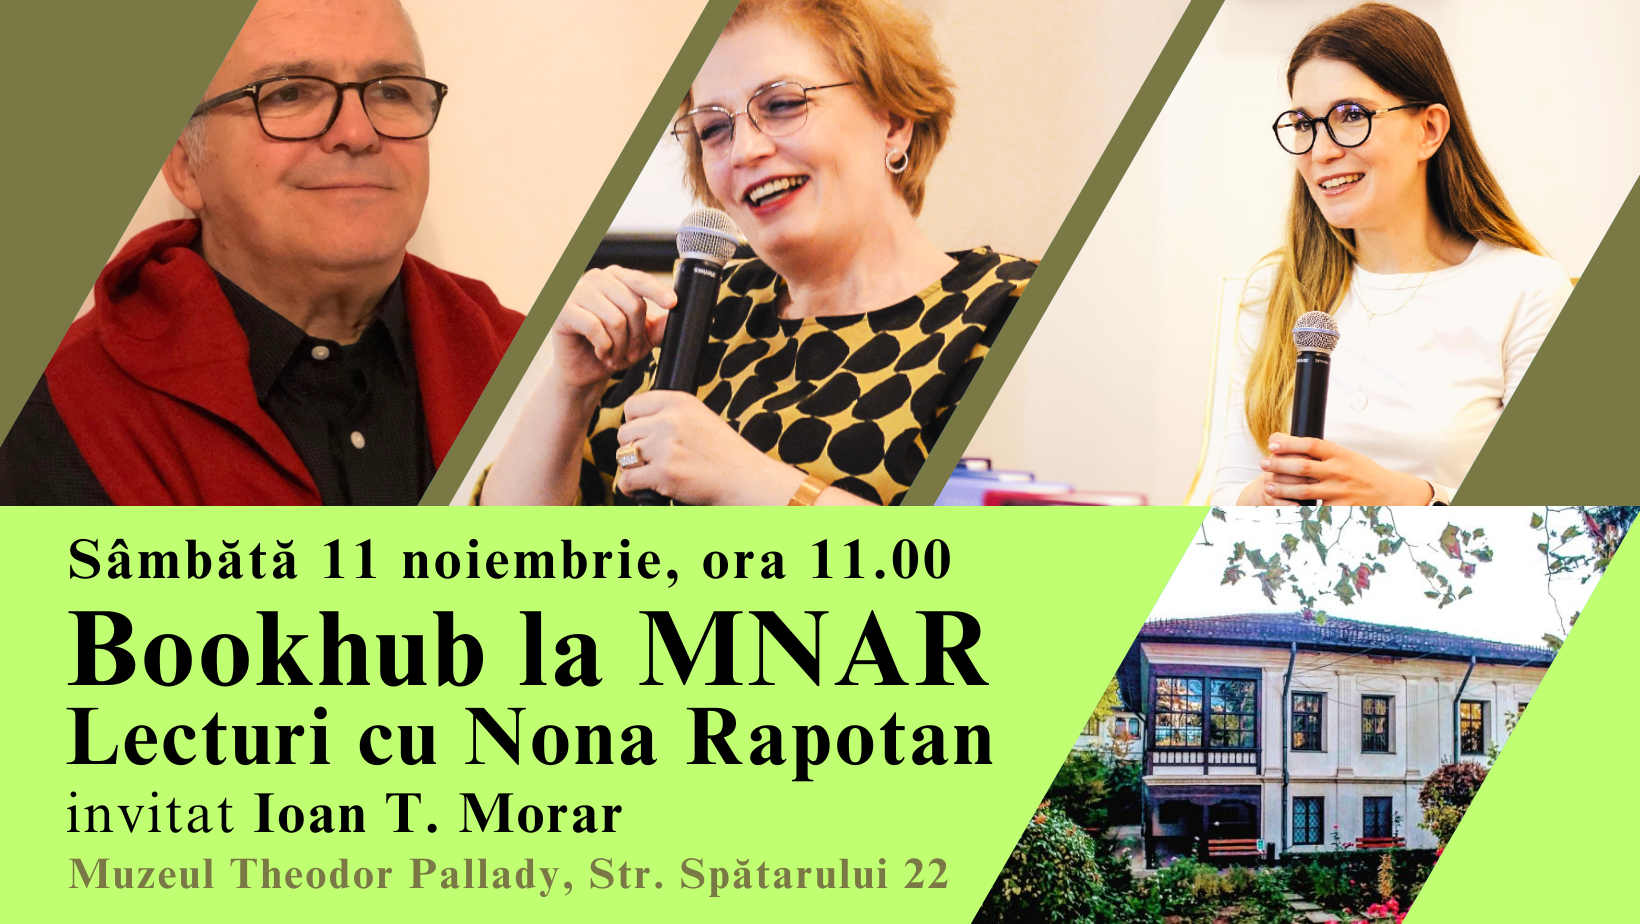 Bookhub la MNAR. Lecturi cu Nona Rapotan. Invitatul ediției va fi Ioan T. Morar